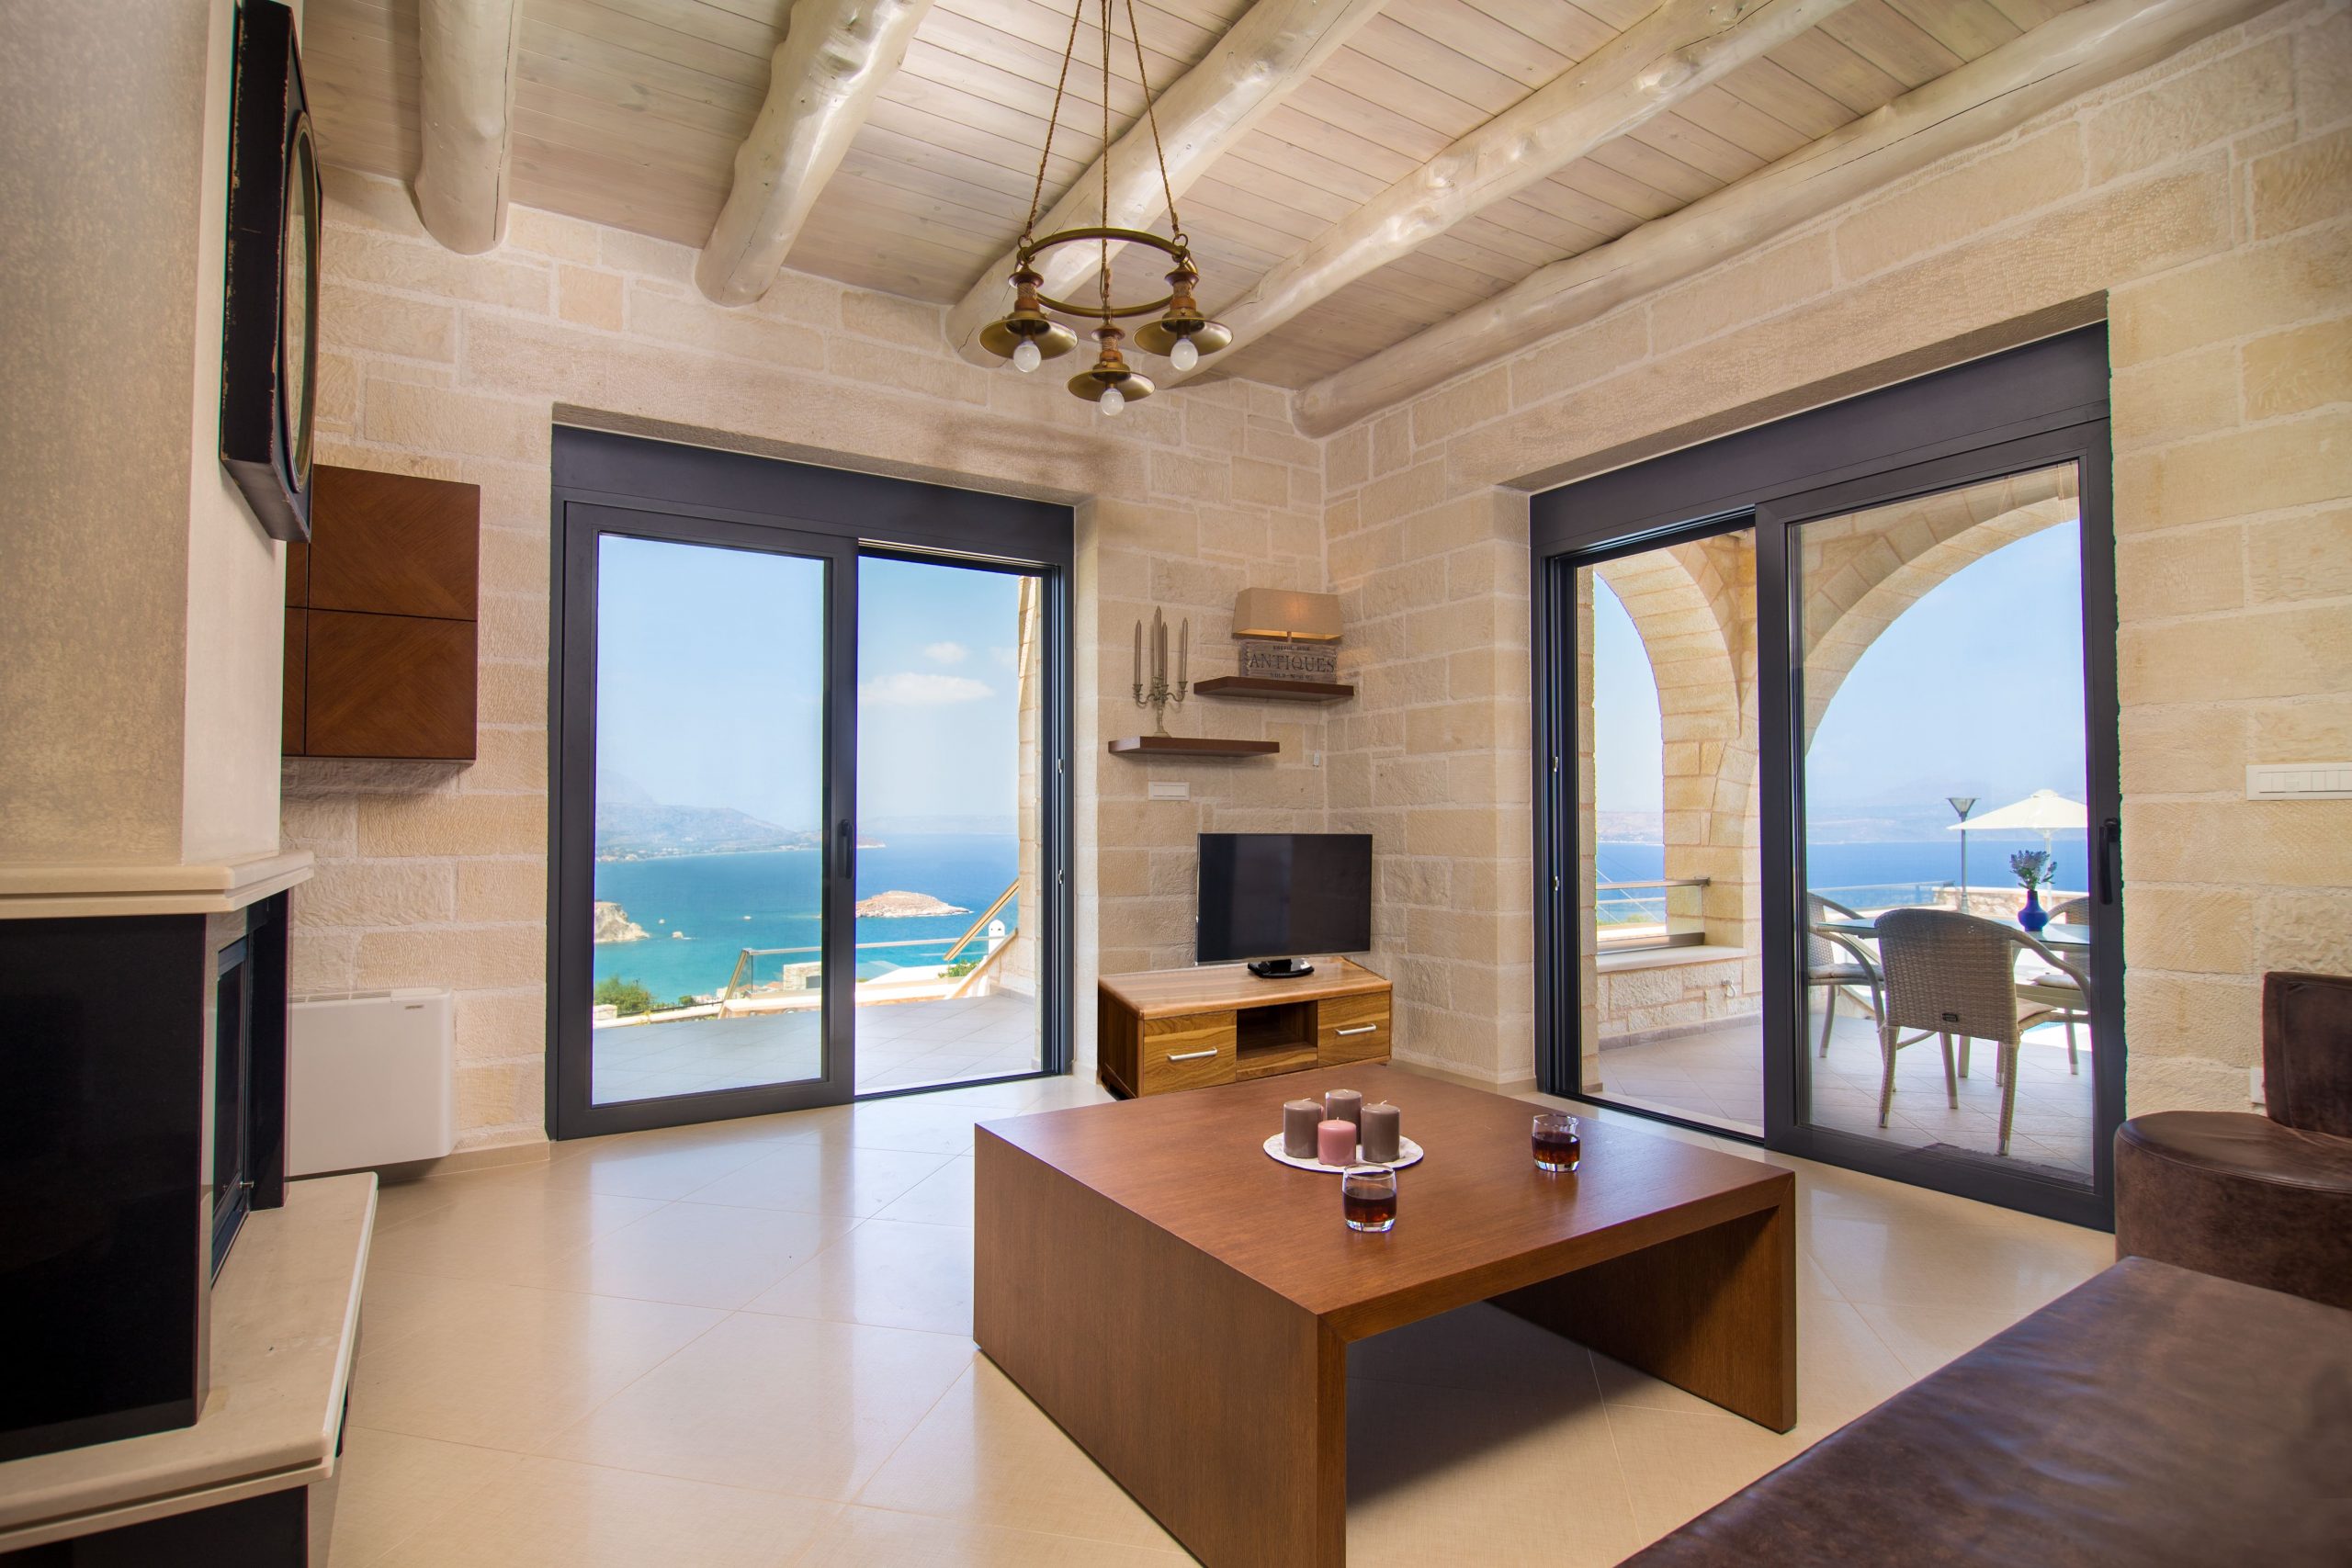 Buy a house in Crete- Kyriakidis Constroction Company- Crete- Greece